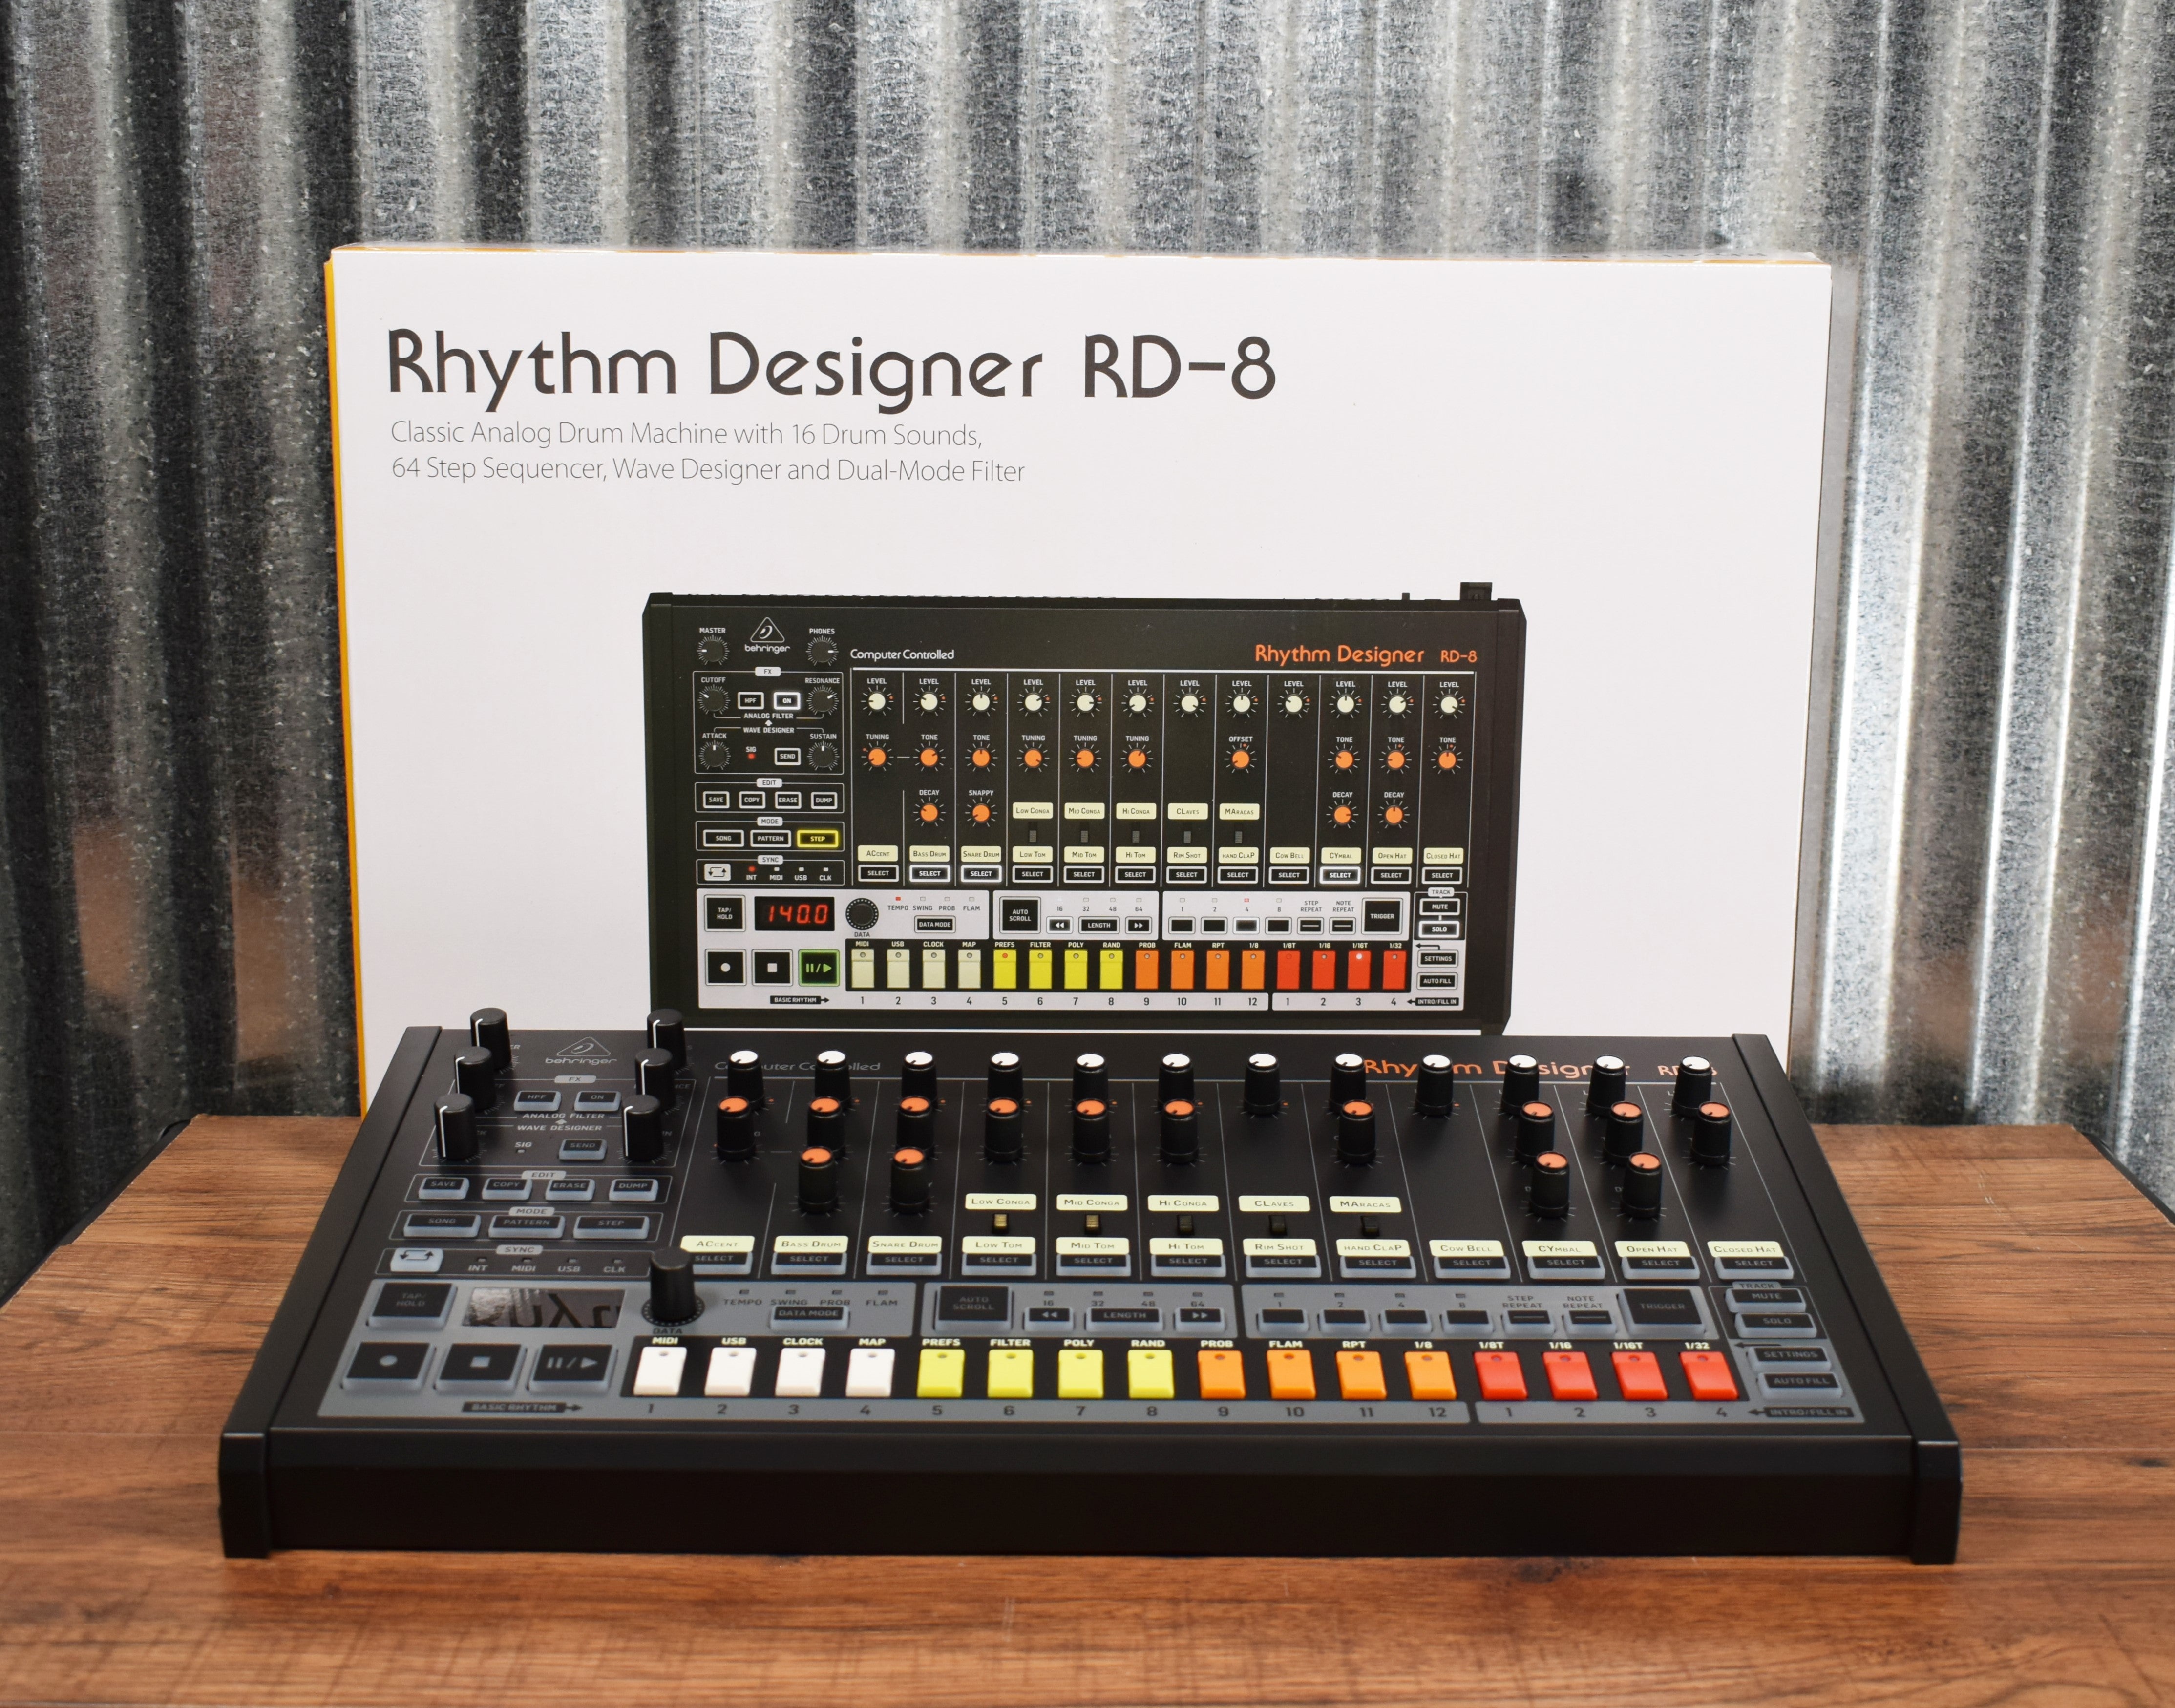 Behringer Rhythm Designer RD-8 Classic Analog Drum Machine Sequencer